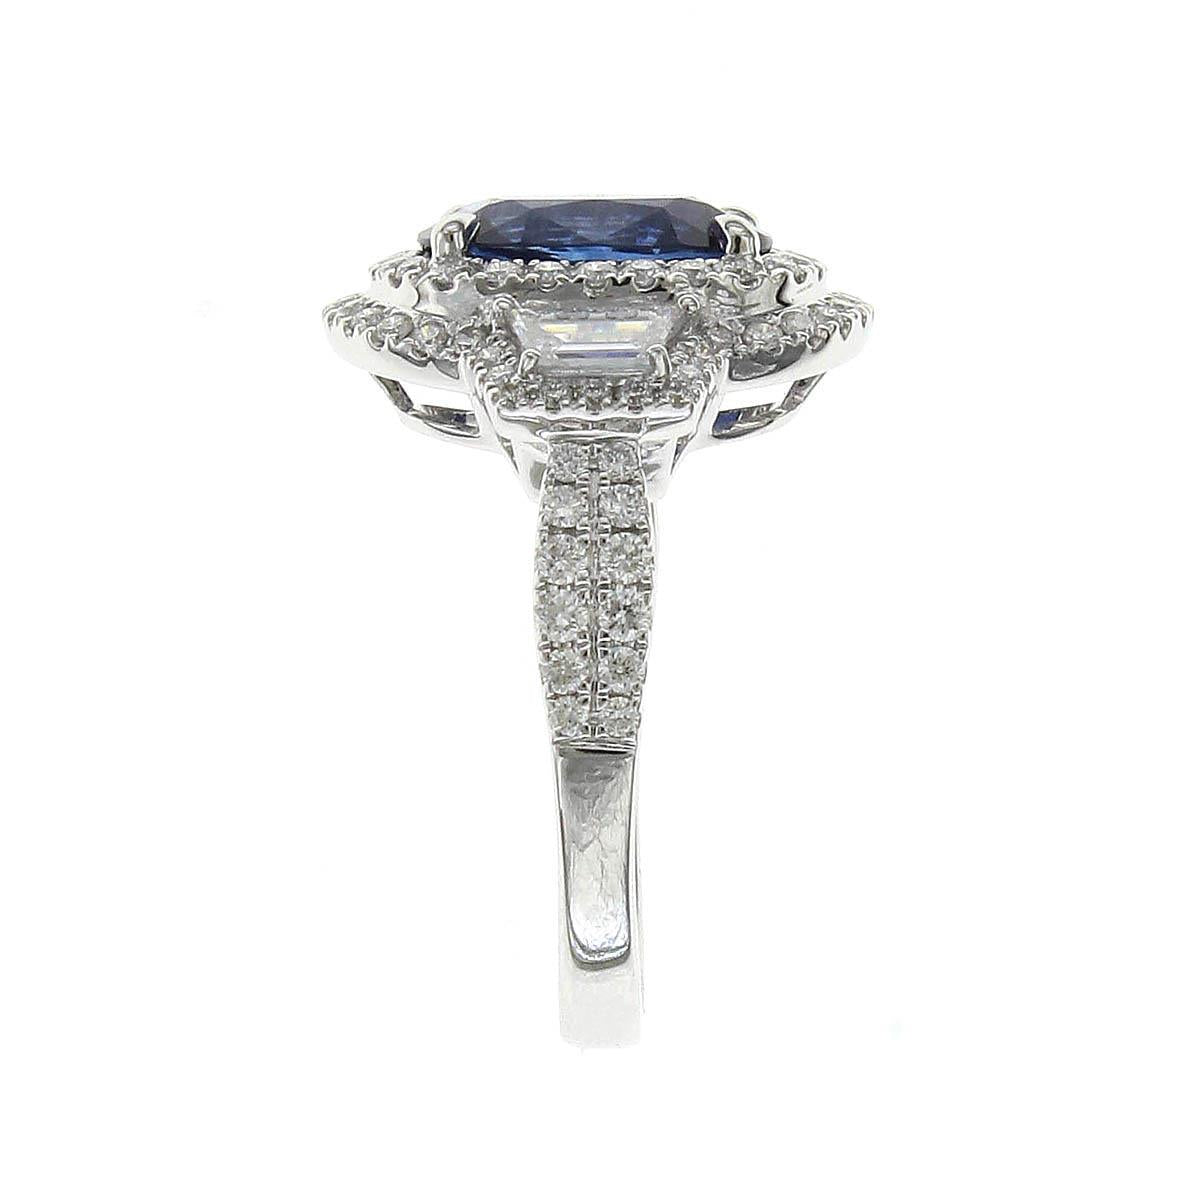 Ladies Statement 3.14ct Oval Cut Blue Sapphire & Diamond Ring